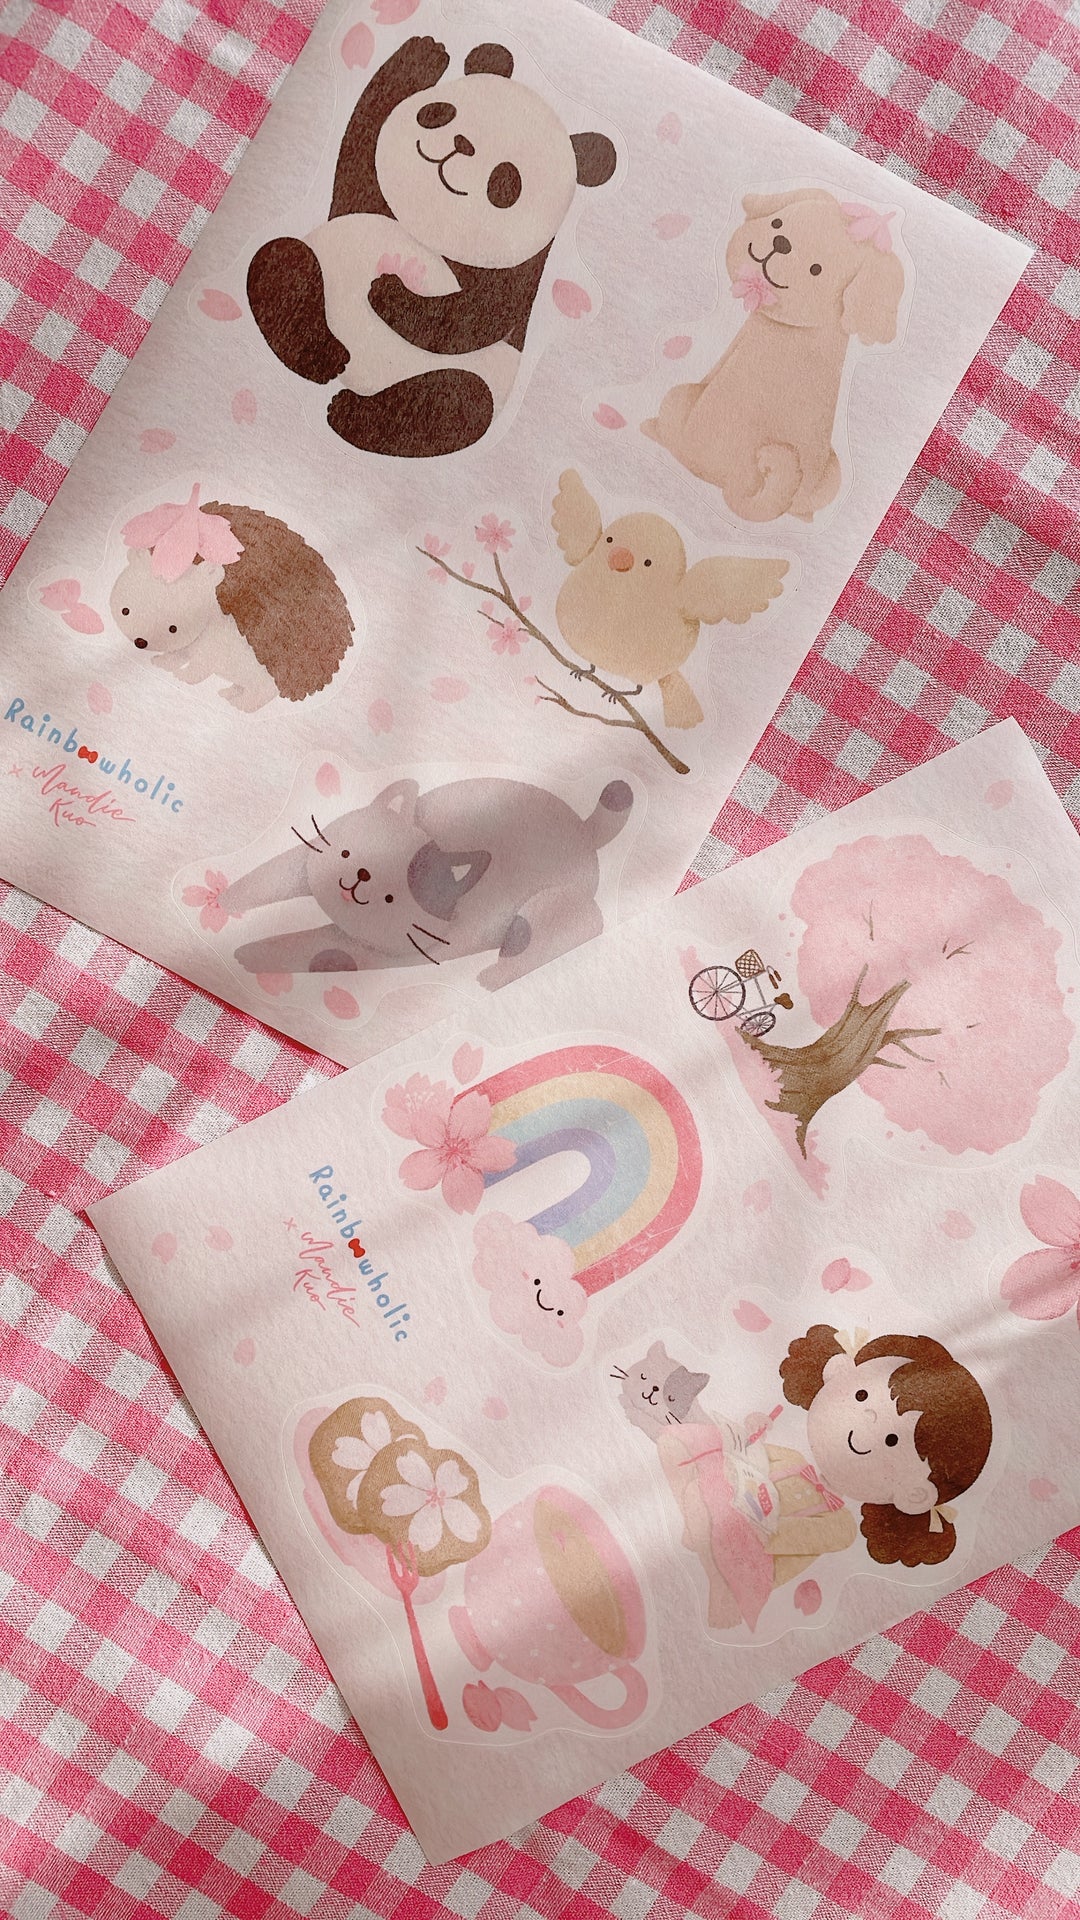 (ST020) Rainbowholic x Mandie Kuo Collab Sakura & Kawaii Animals Sticker Set (2 sheets)